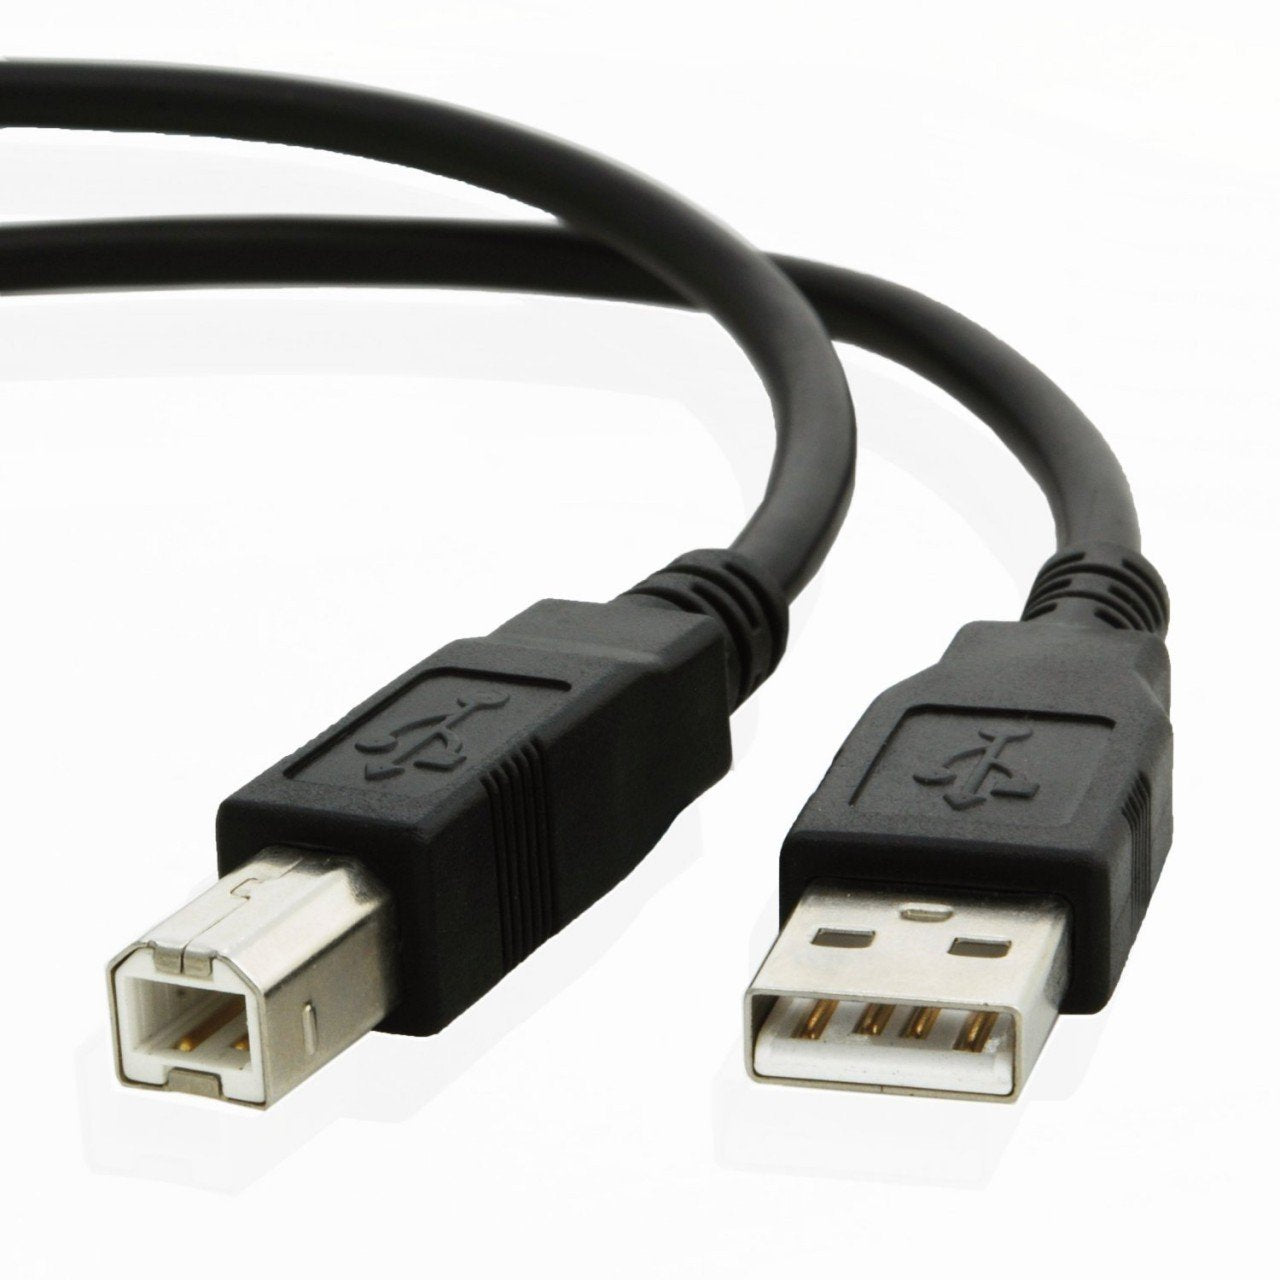 USB cable for Fujitsu SCANSNAP iX100